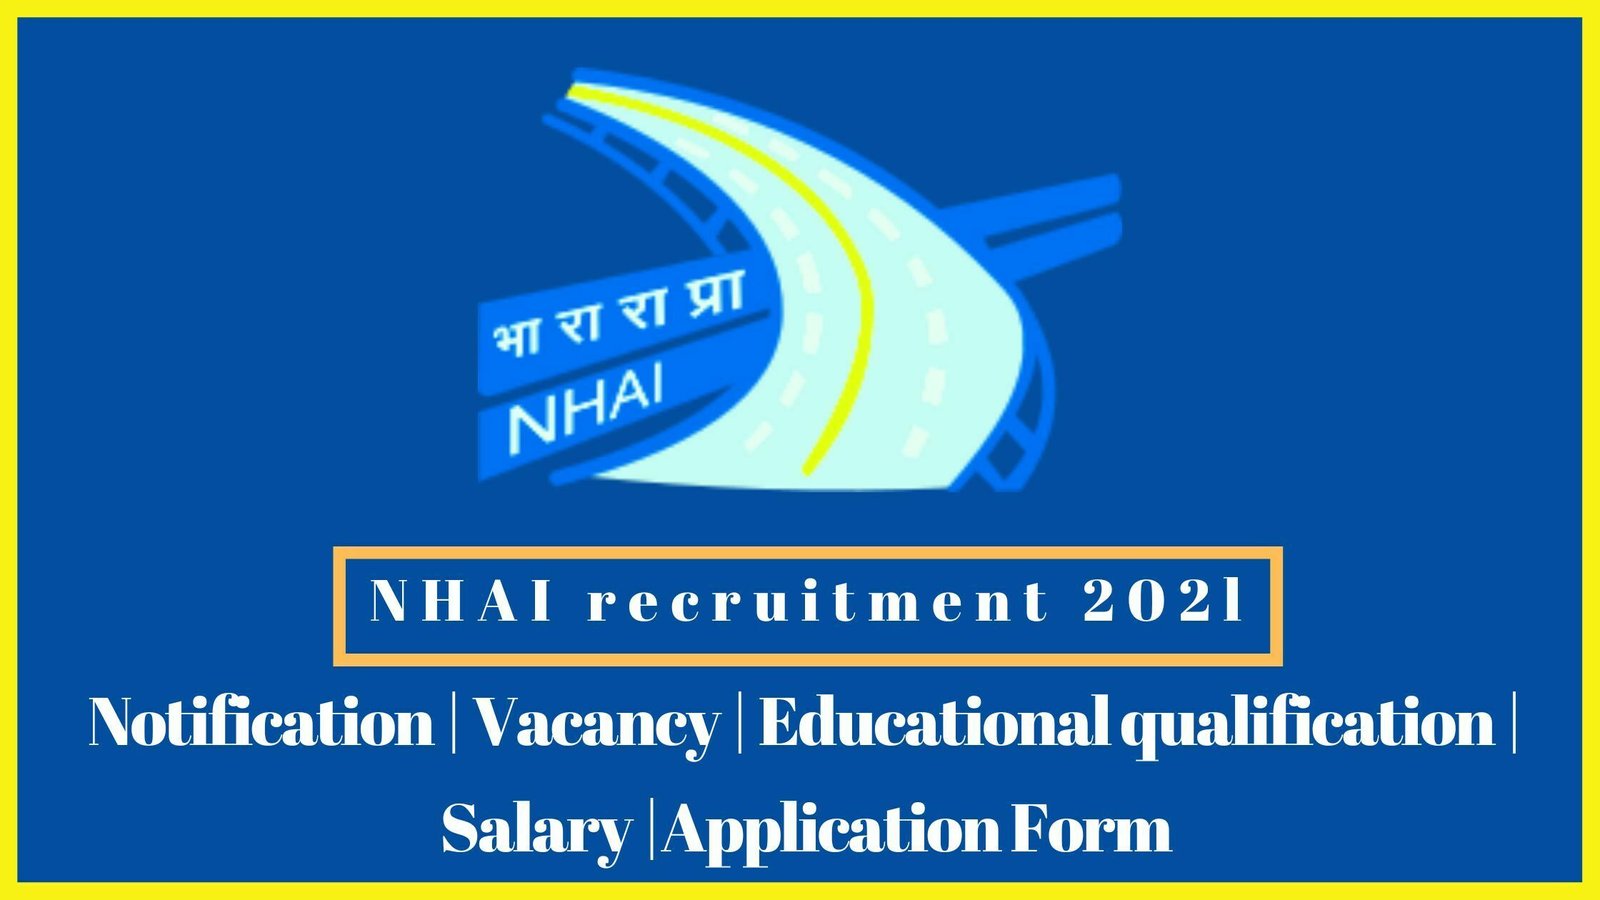 NHAI recruitment 2022 in Tamil